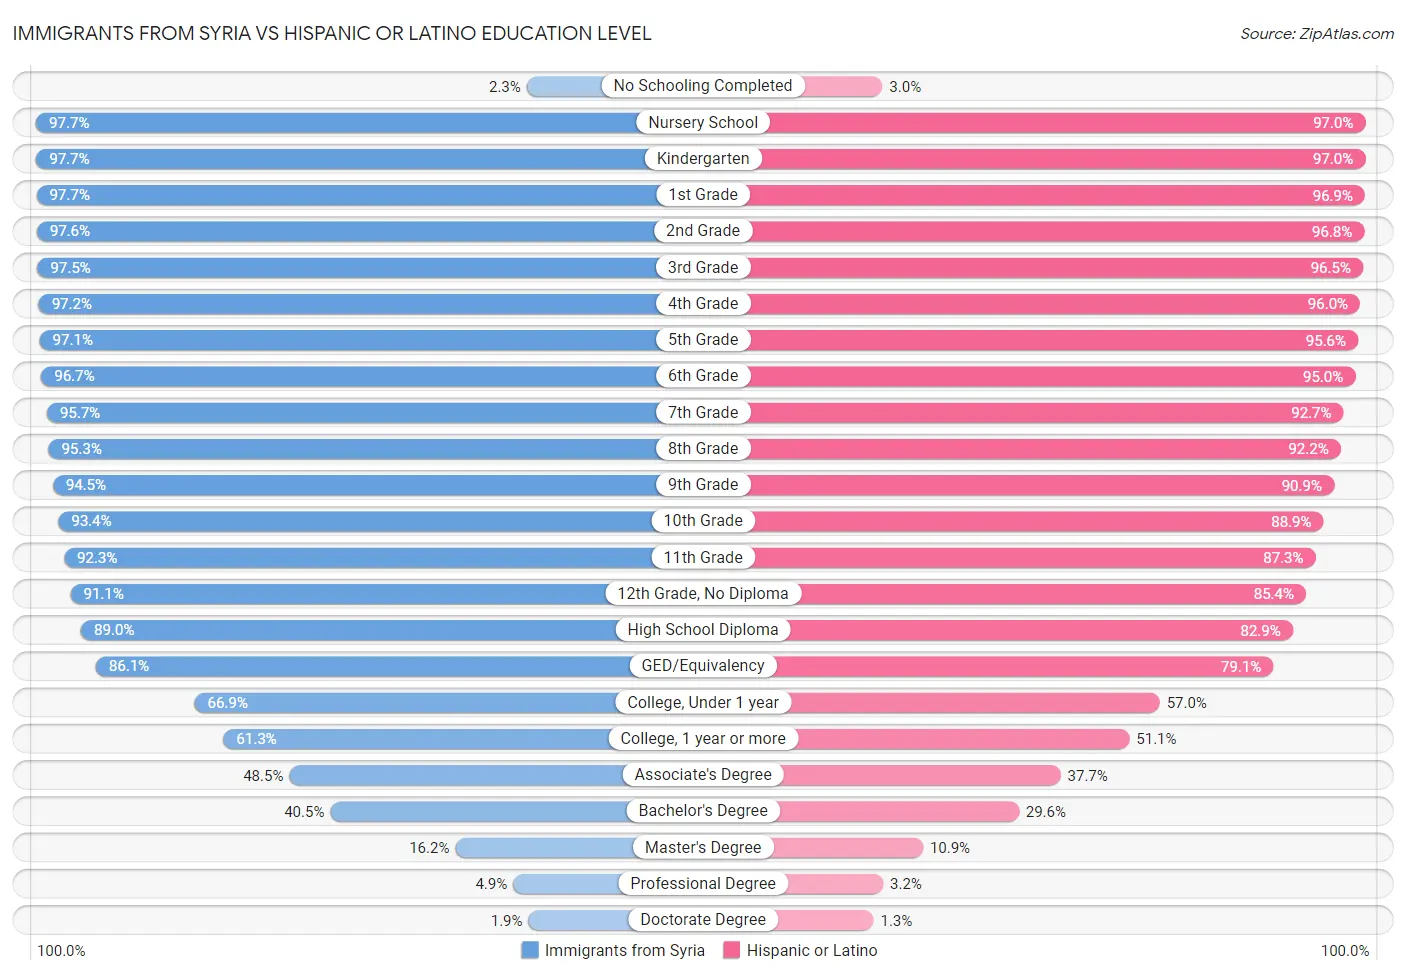 Immigrants from Syria vs Hispanic or Latino Education Level